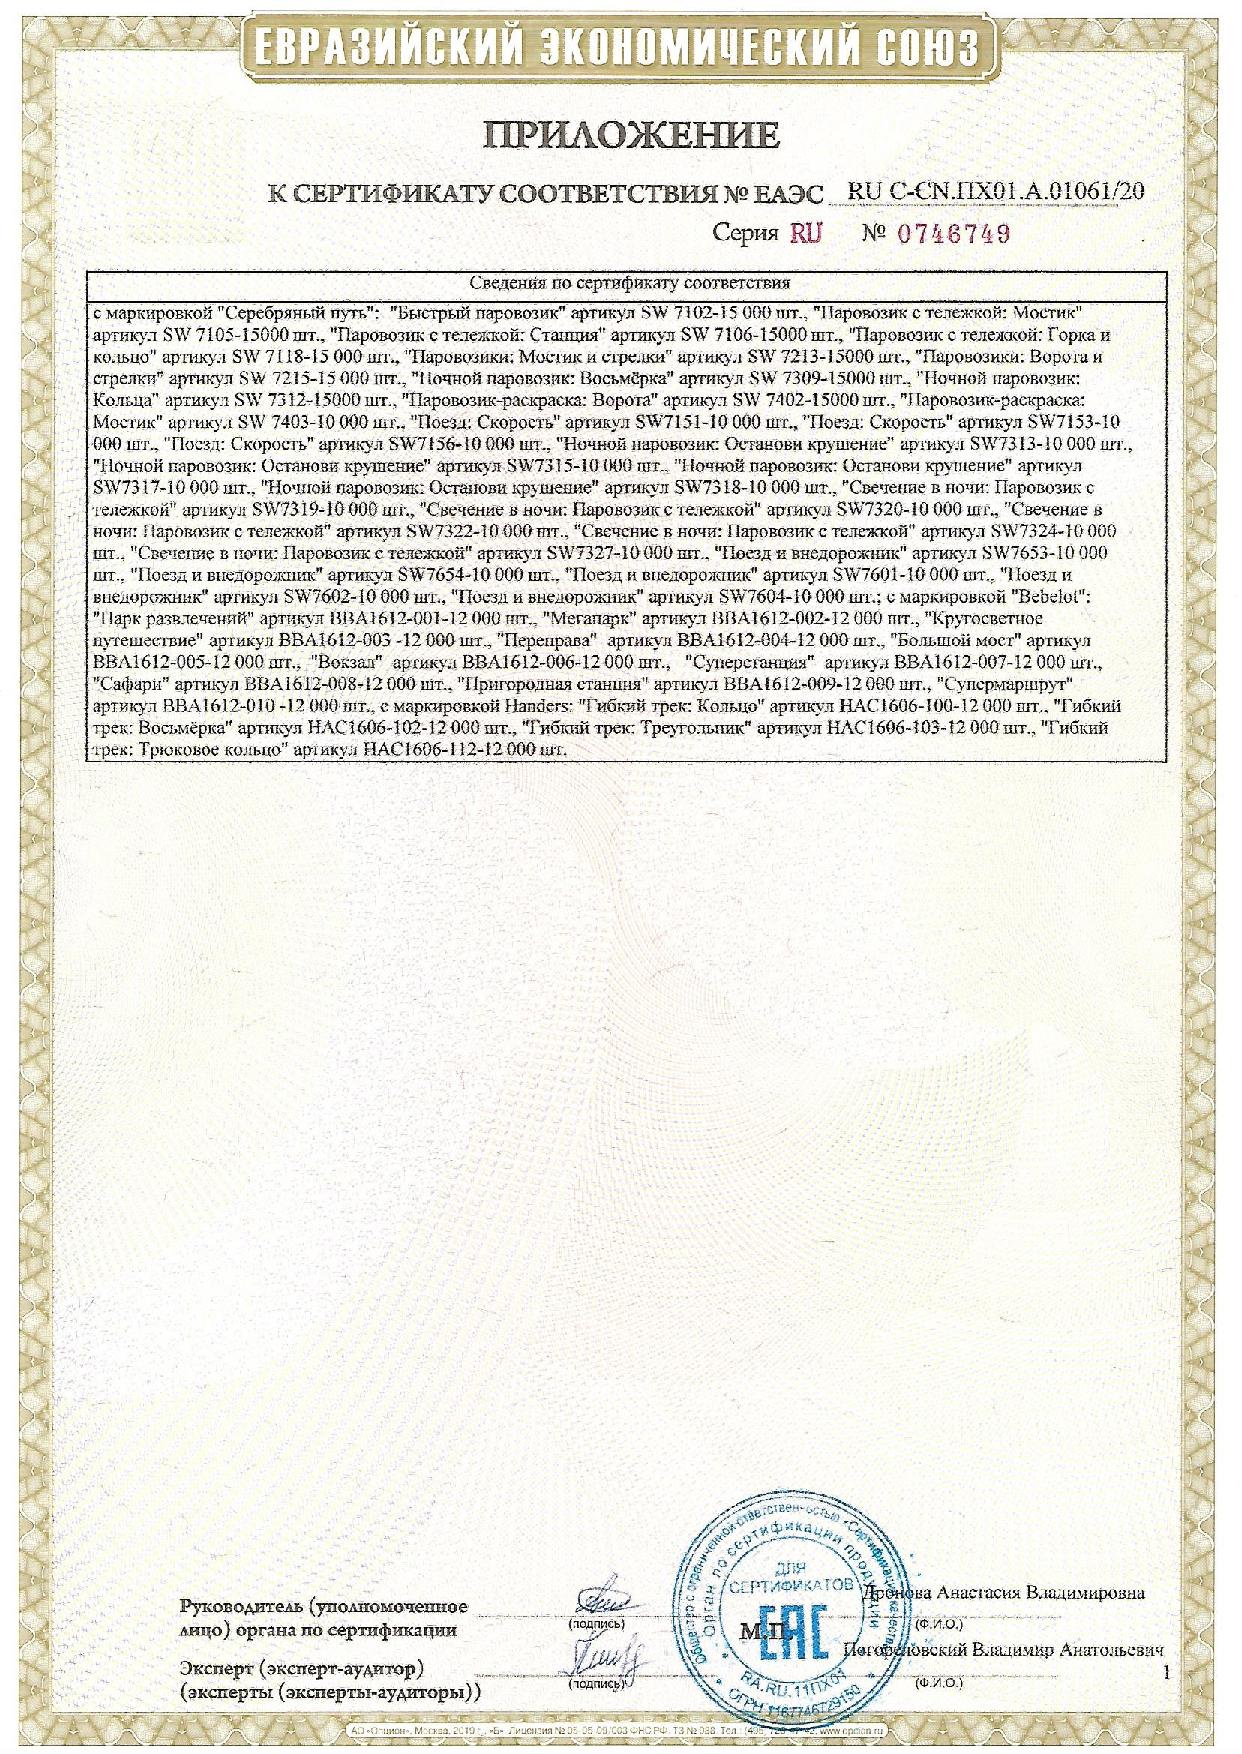 ЕАЭС RU C-CN.ПХ01.А.01061 20: /images/certificates/EAES-RU-C-CN.PH01.A.01061-20-2.jpg